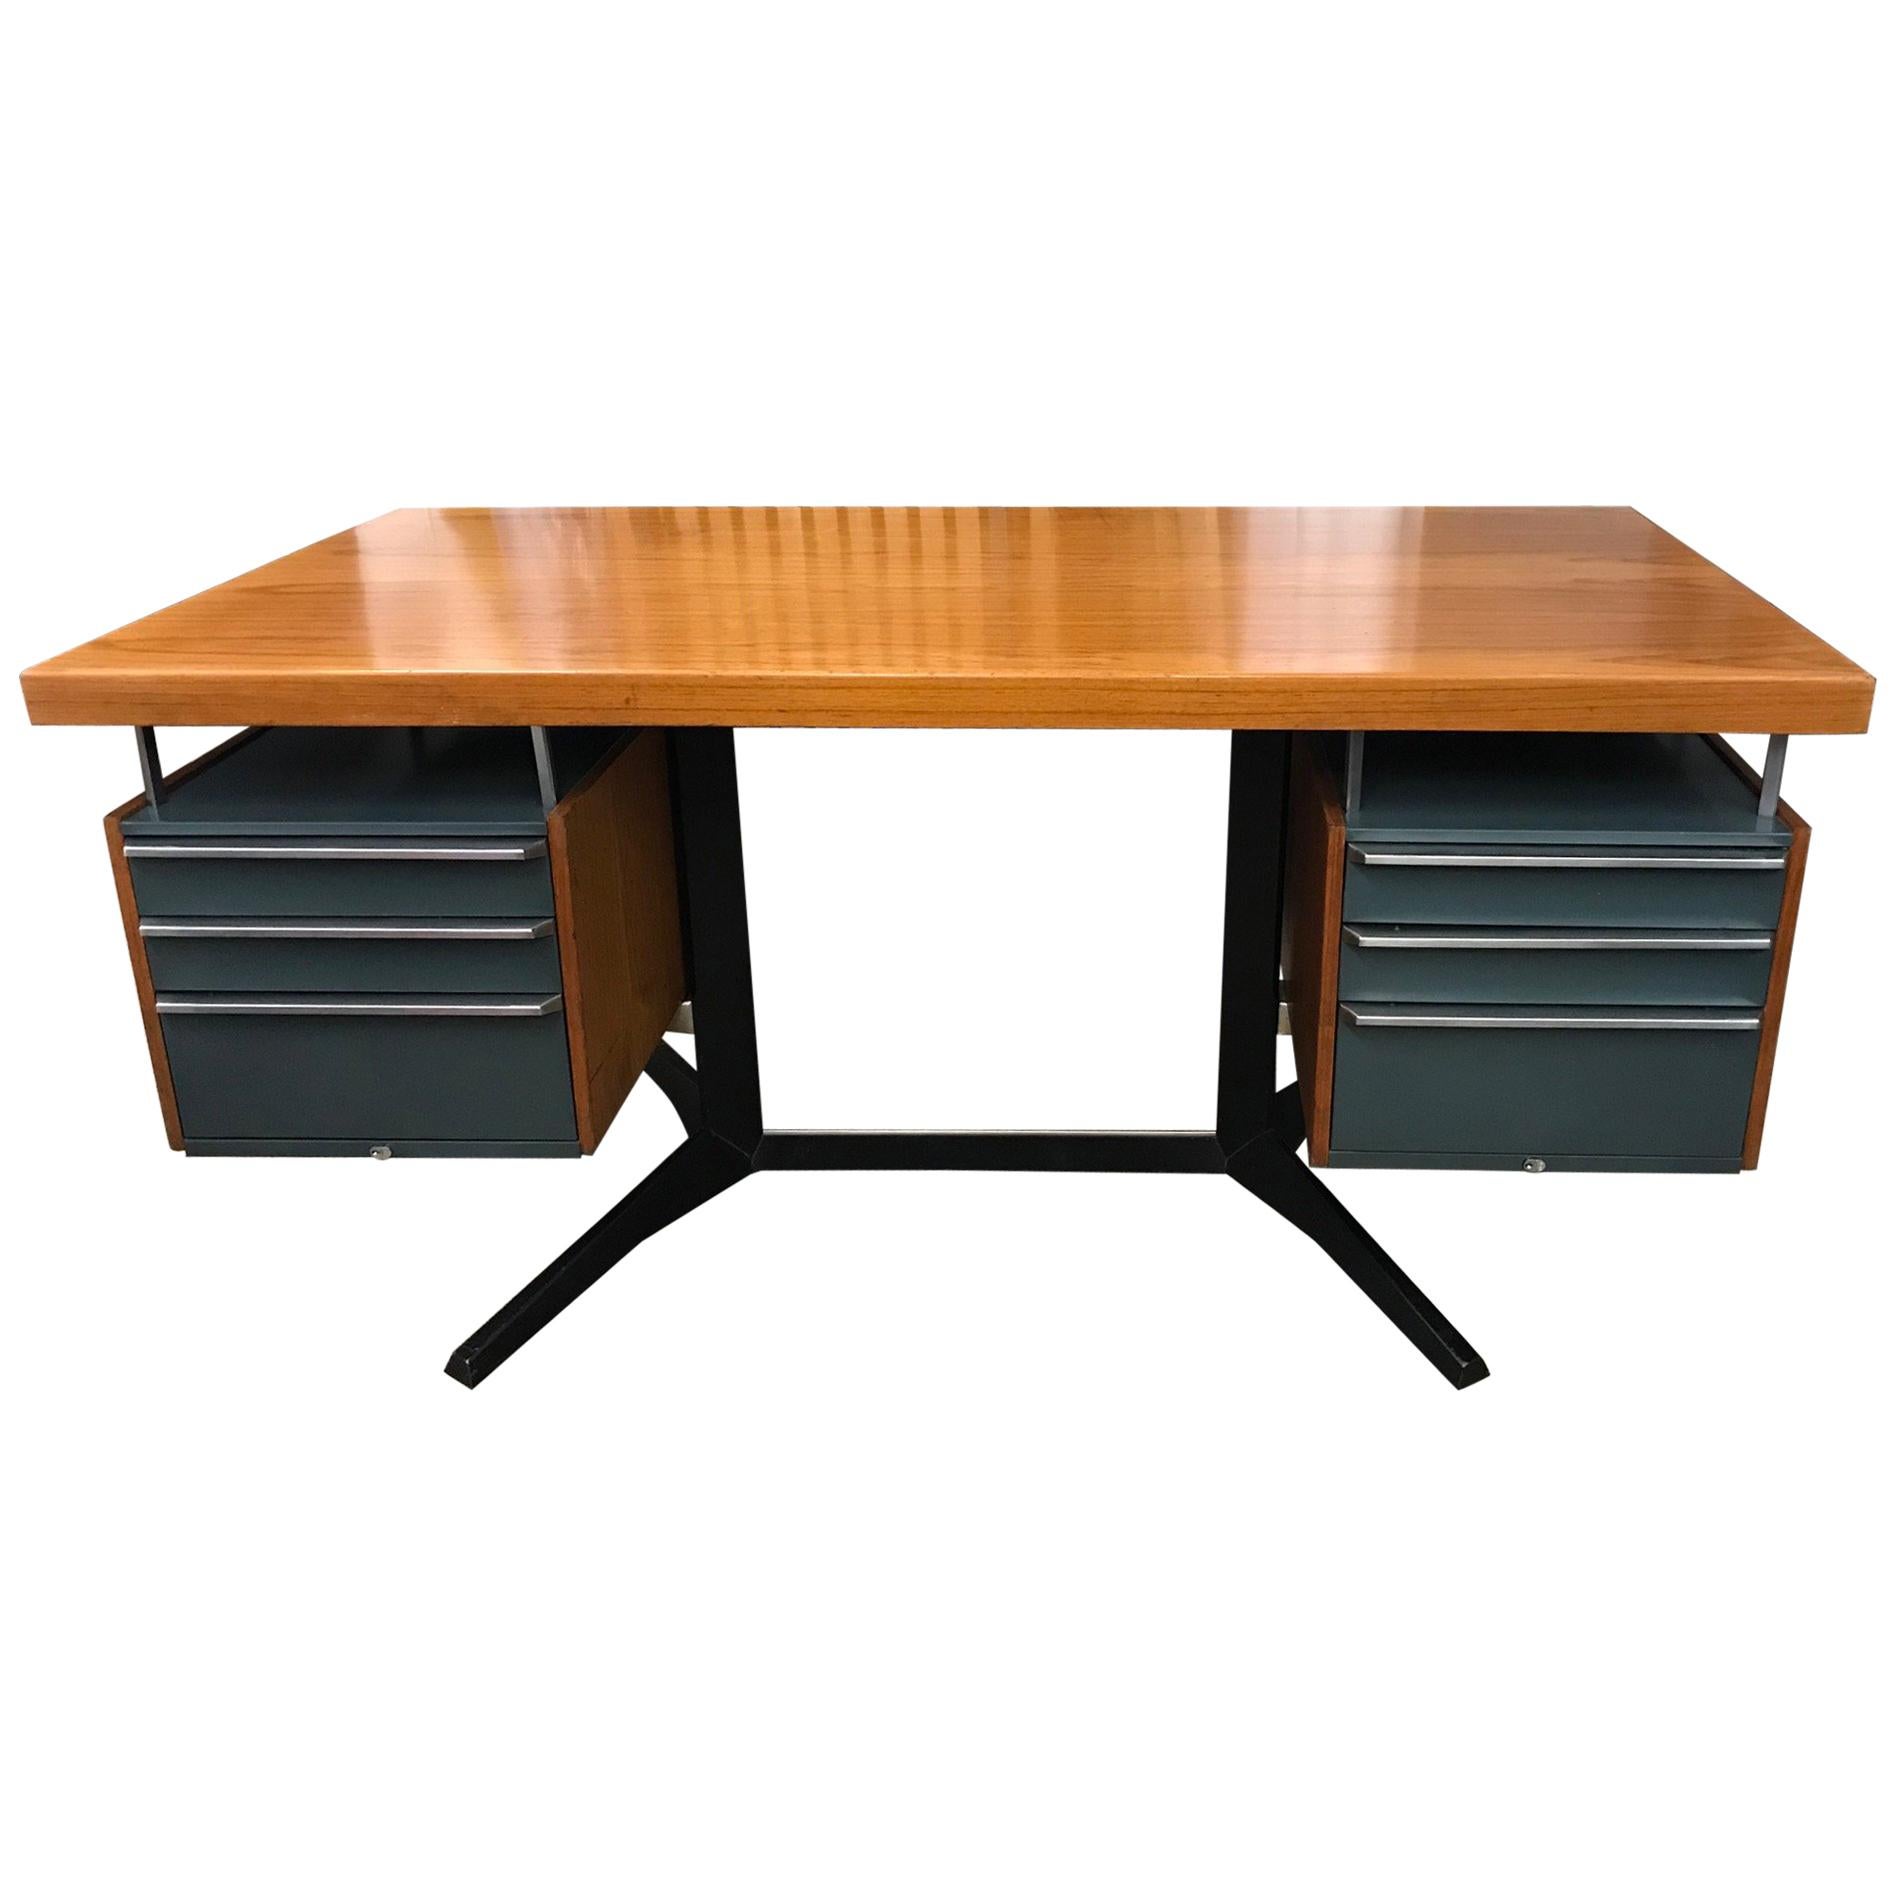 Desk by Daciano da Costa for Metalurgica da Longra